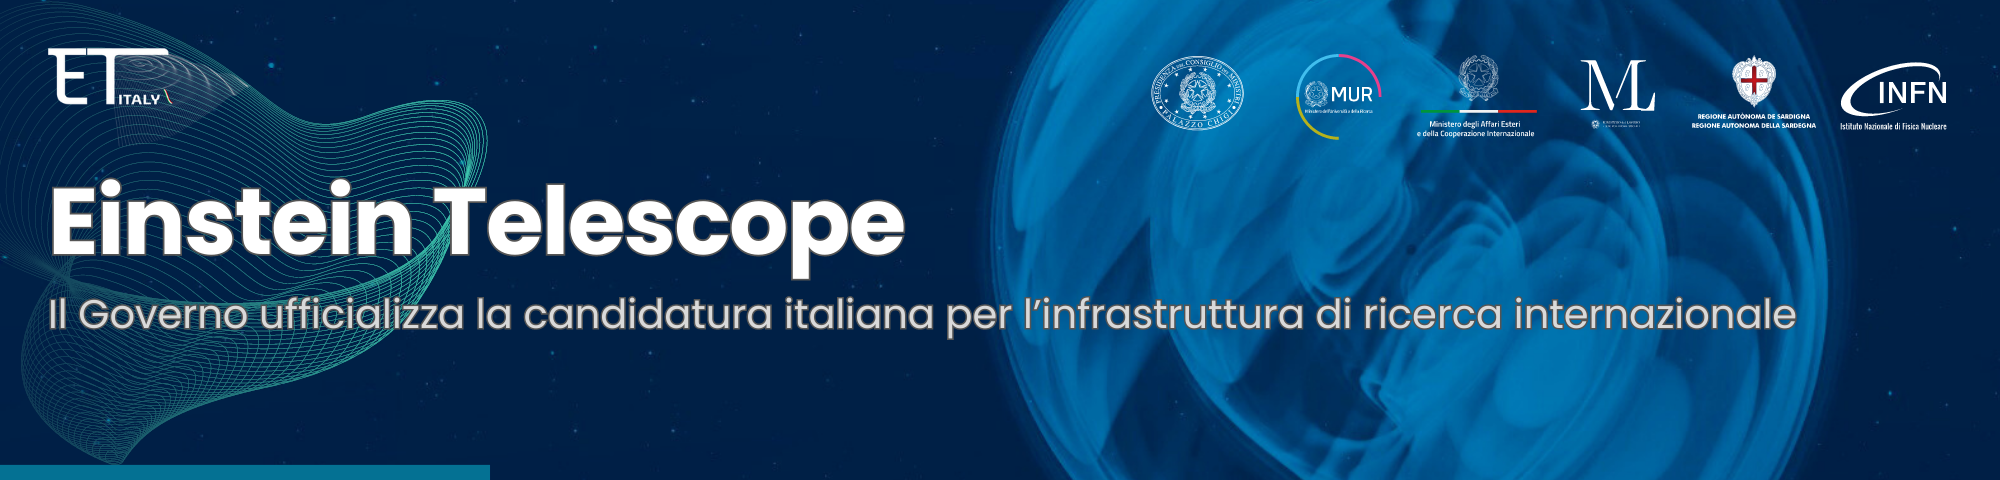 Banner candidatura italiana per Einstein Telescope